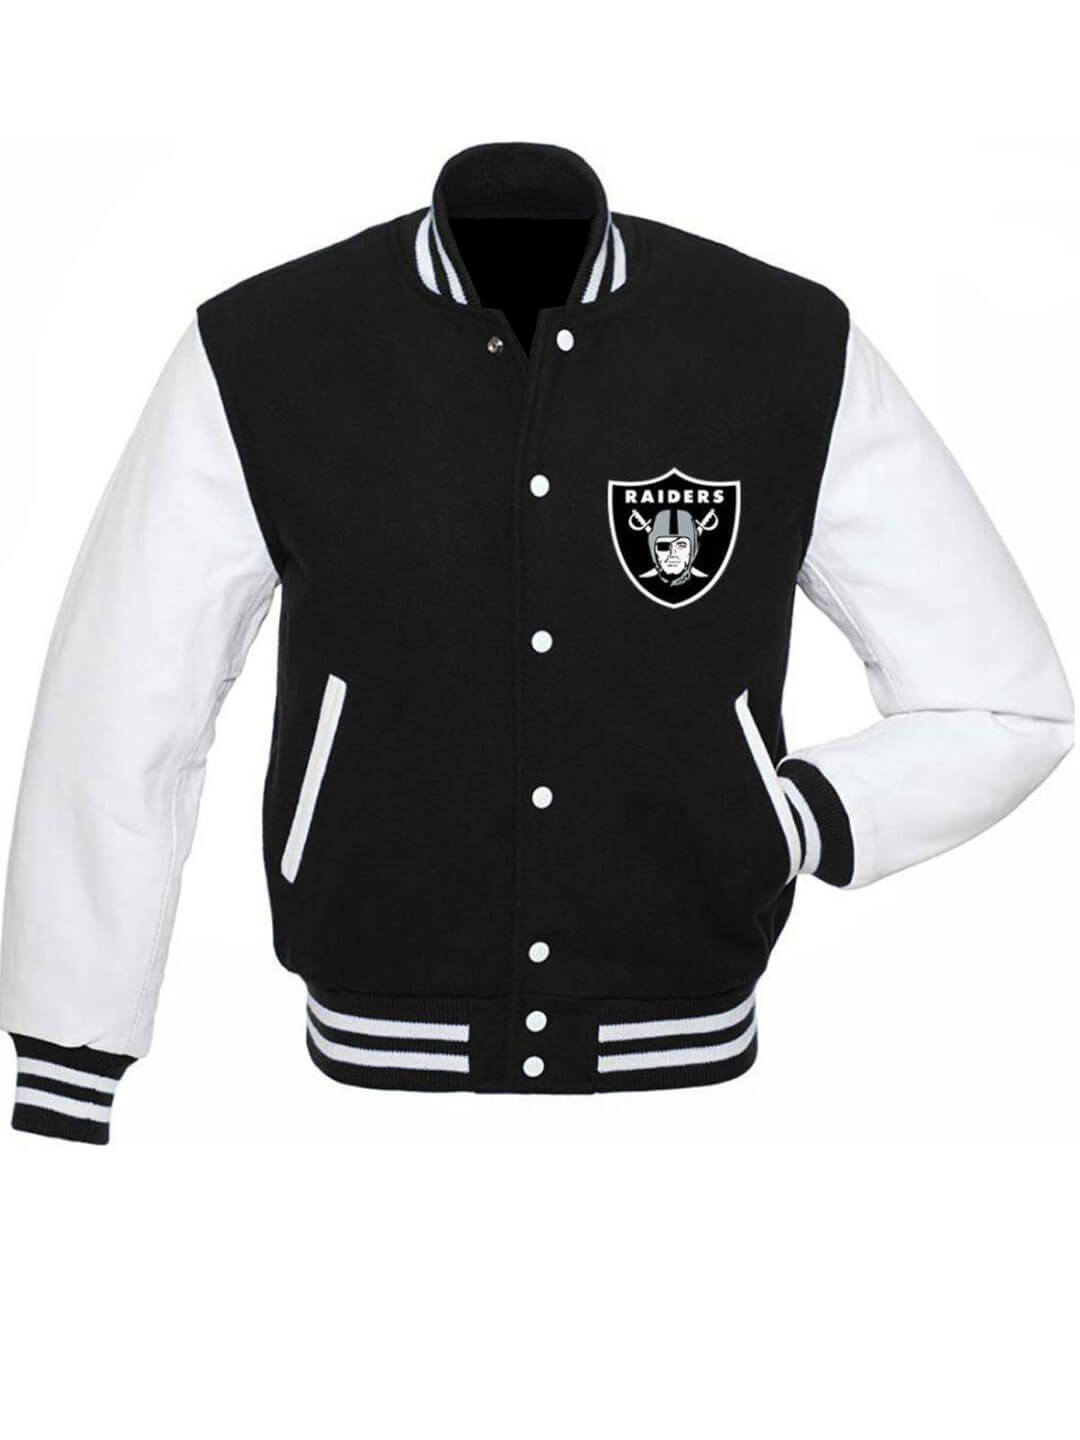 NFL Black White Las Vegas Raiders Varsity Jacket - Maker of Jacket